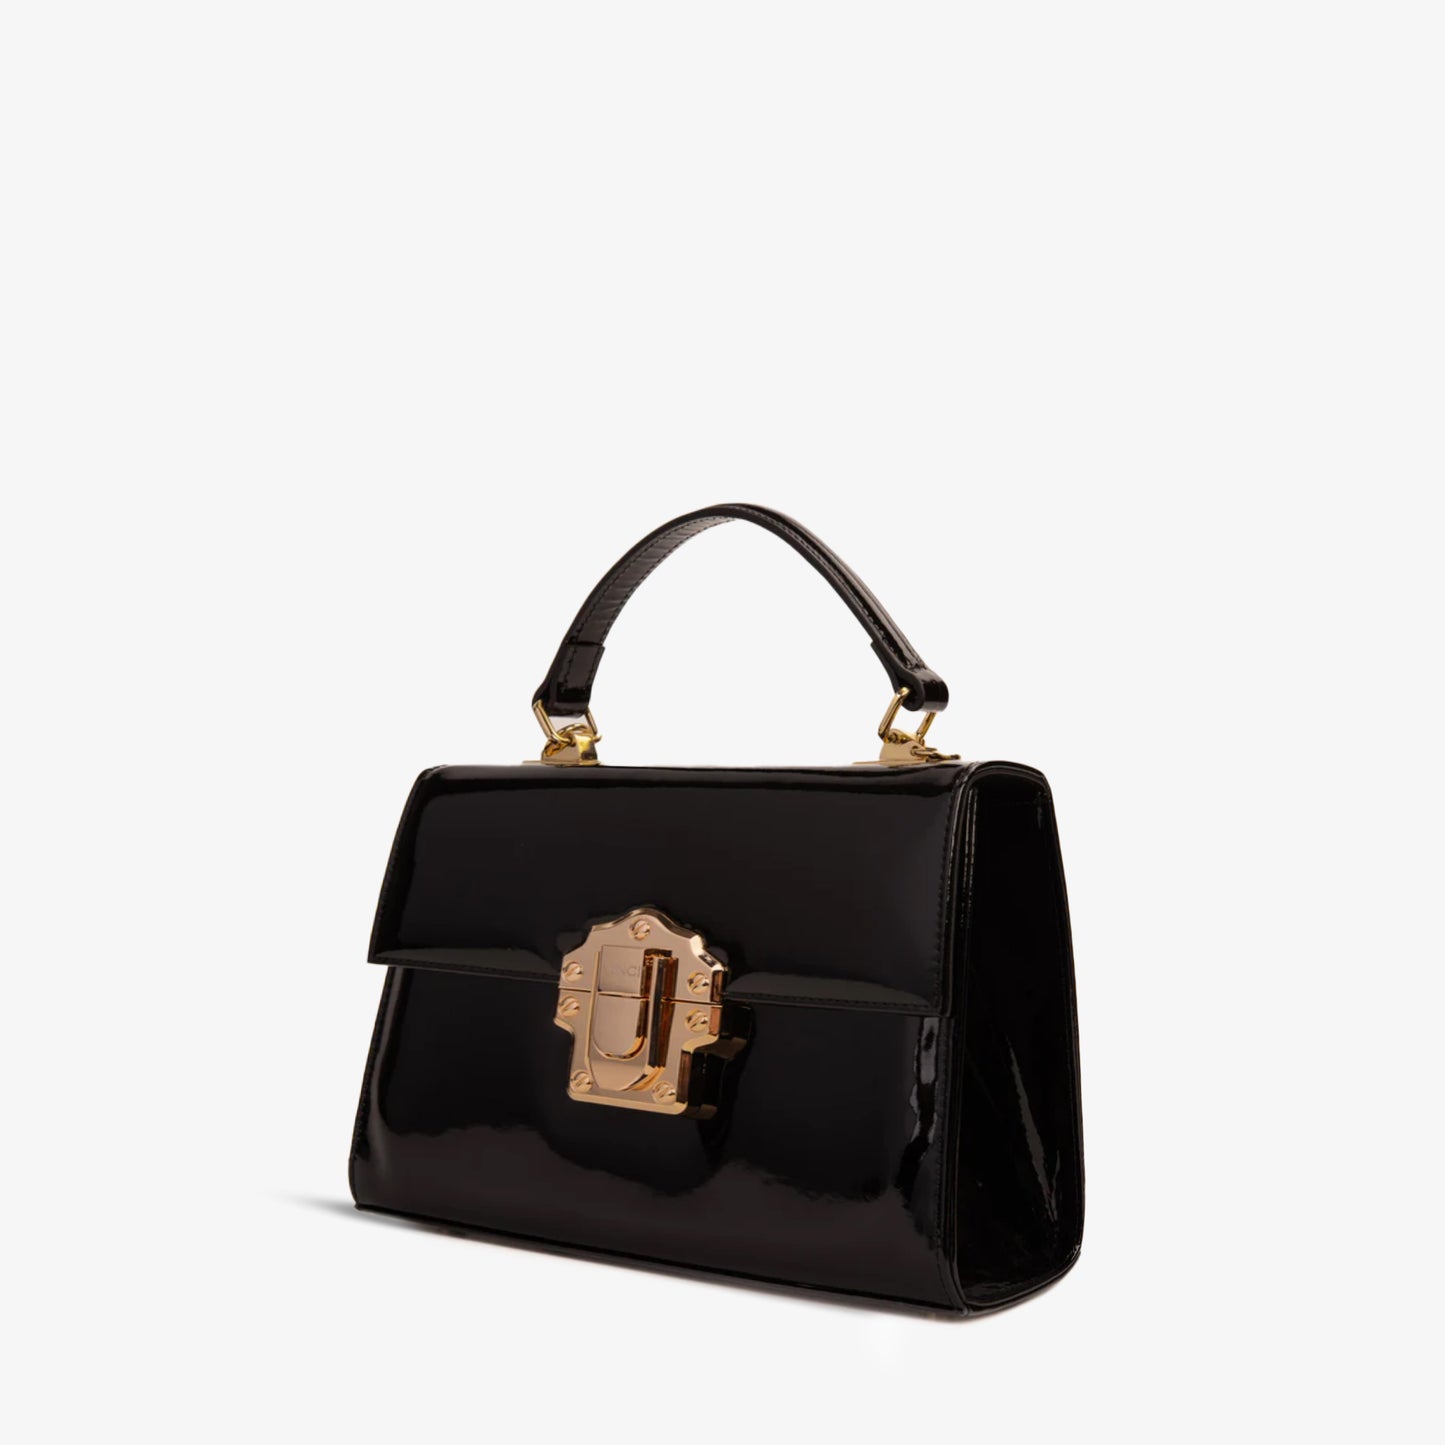 The Ege Black Patent Leather Handbag